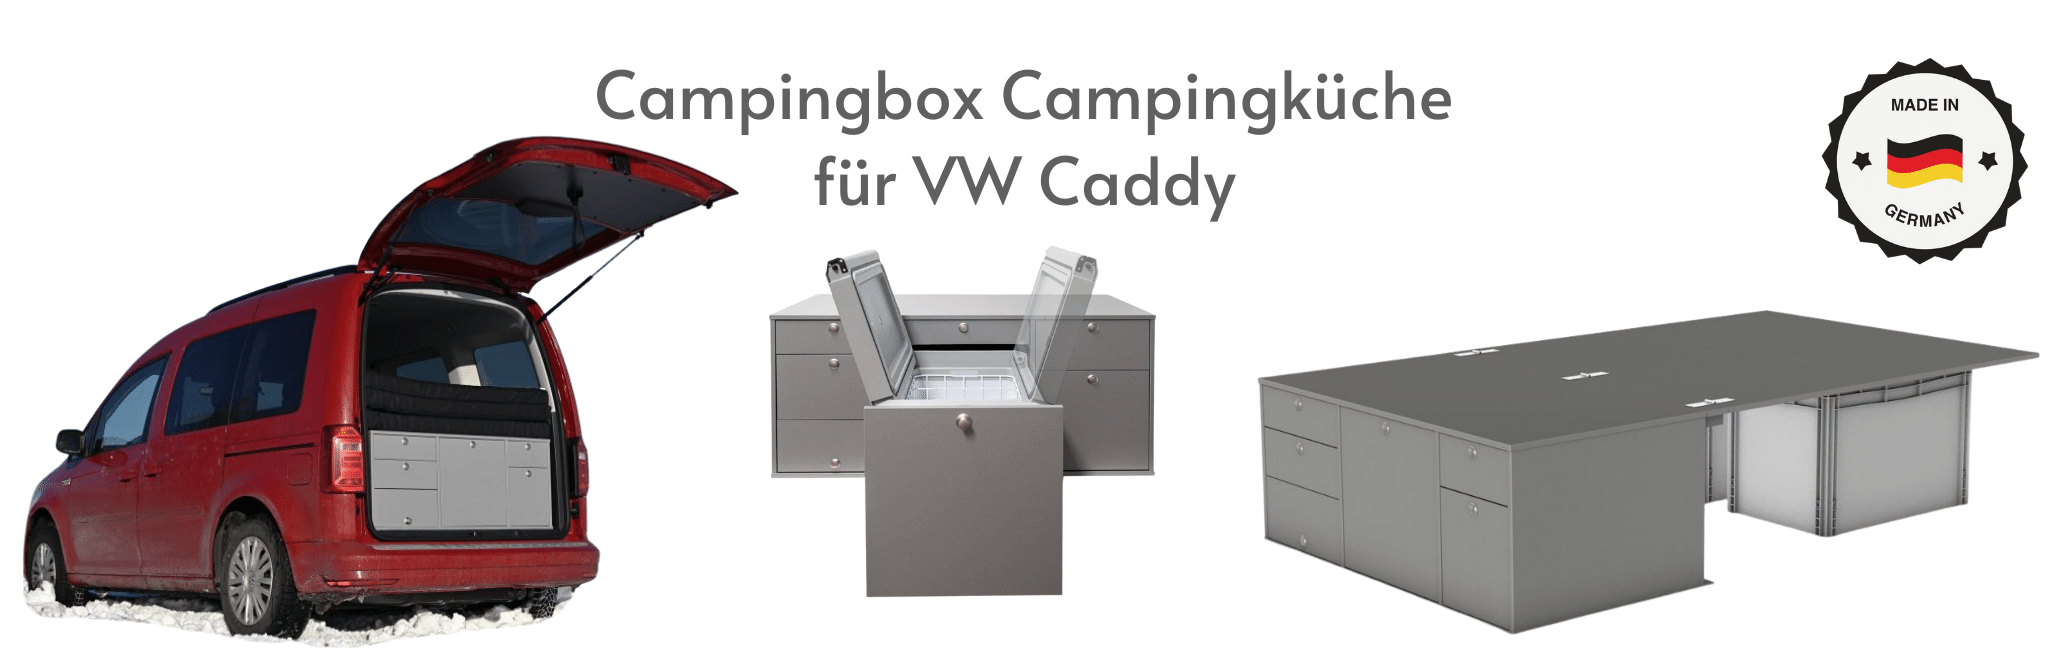 Campingbox Campingküche für VW Caddy